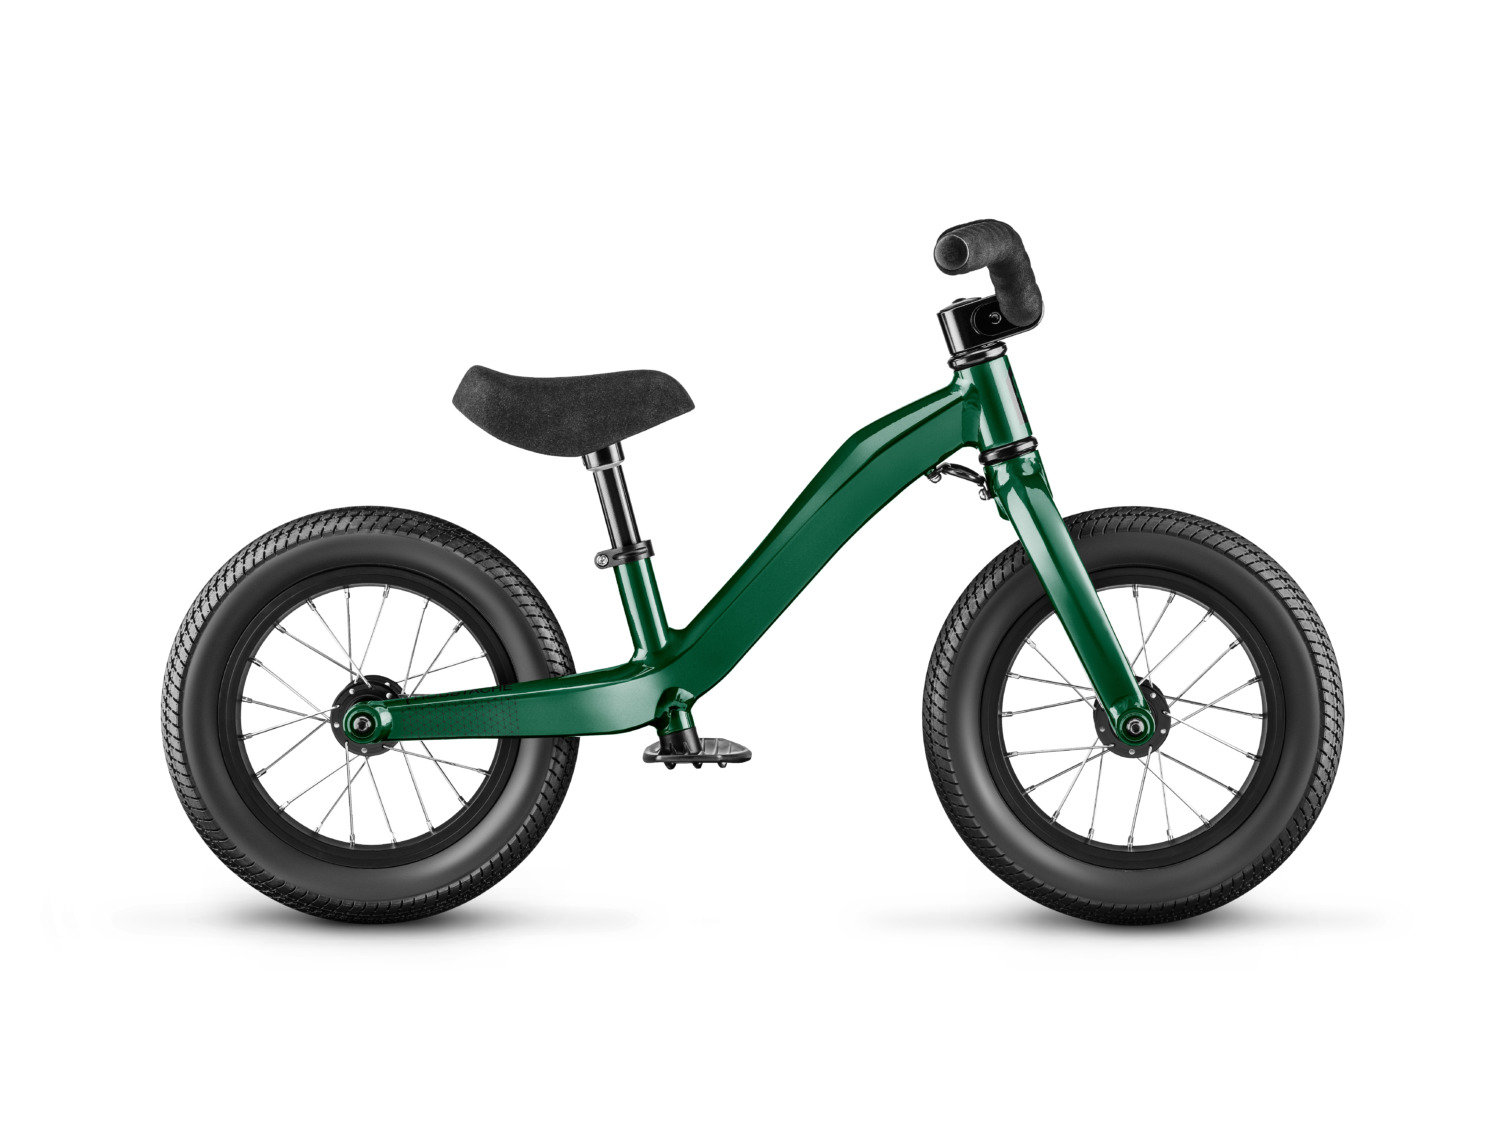 Sacoche smartphone tactile pour vélo - My Green Sport